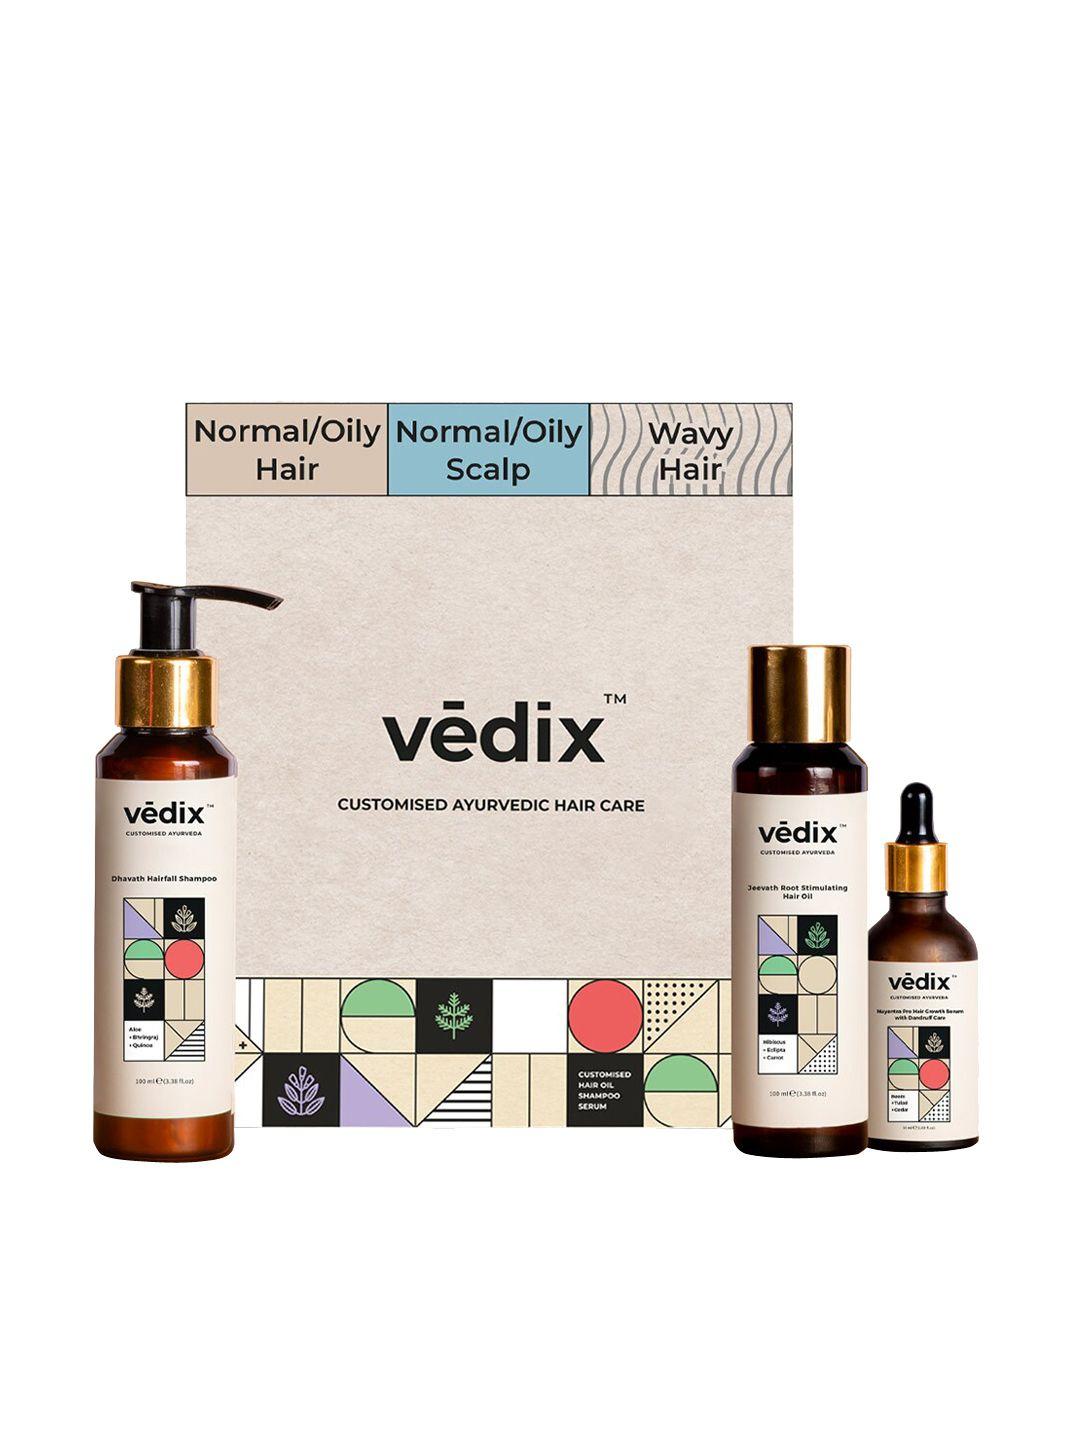 vedix customized hair fall control regimen for dandruff - normal oily scalp + wavy hair